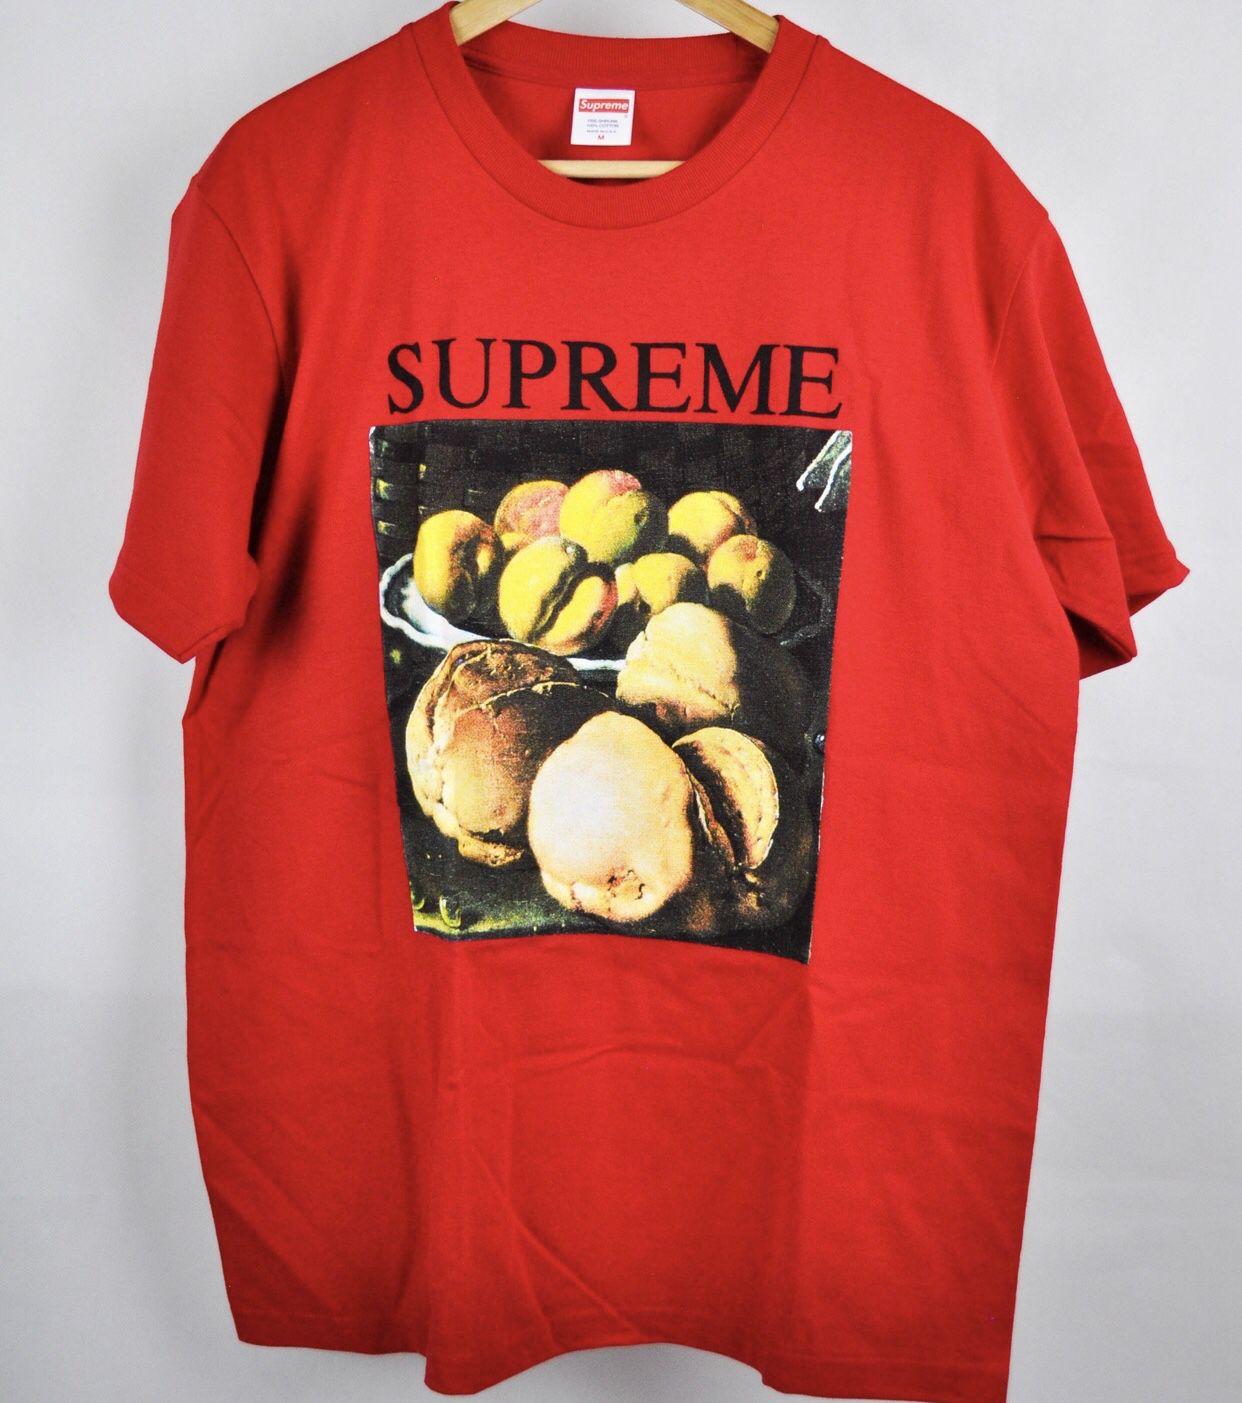 Supreme t shirt